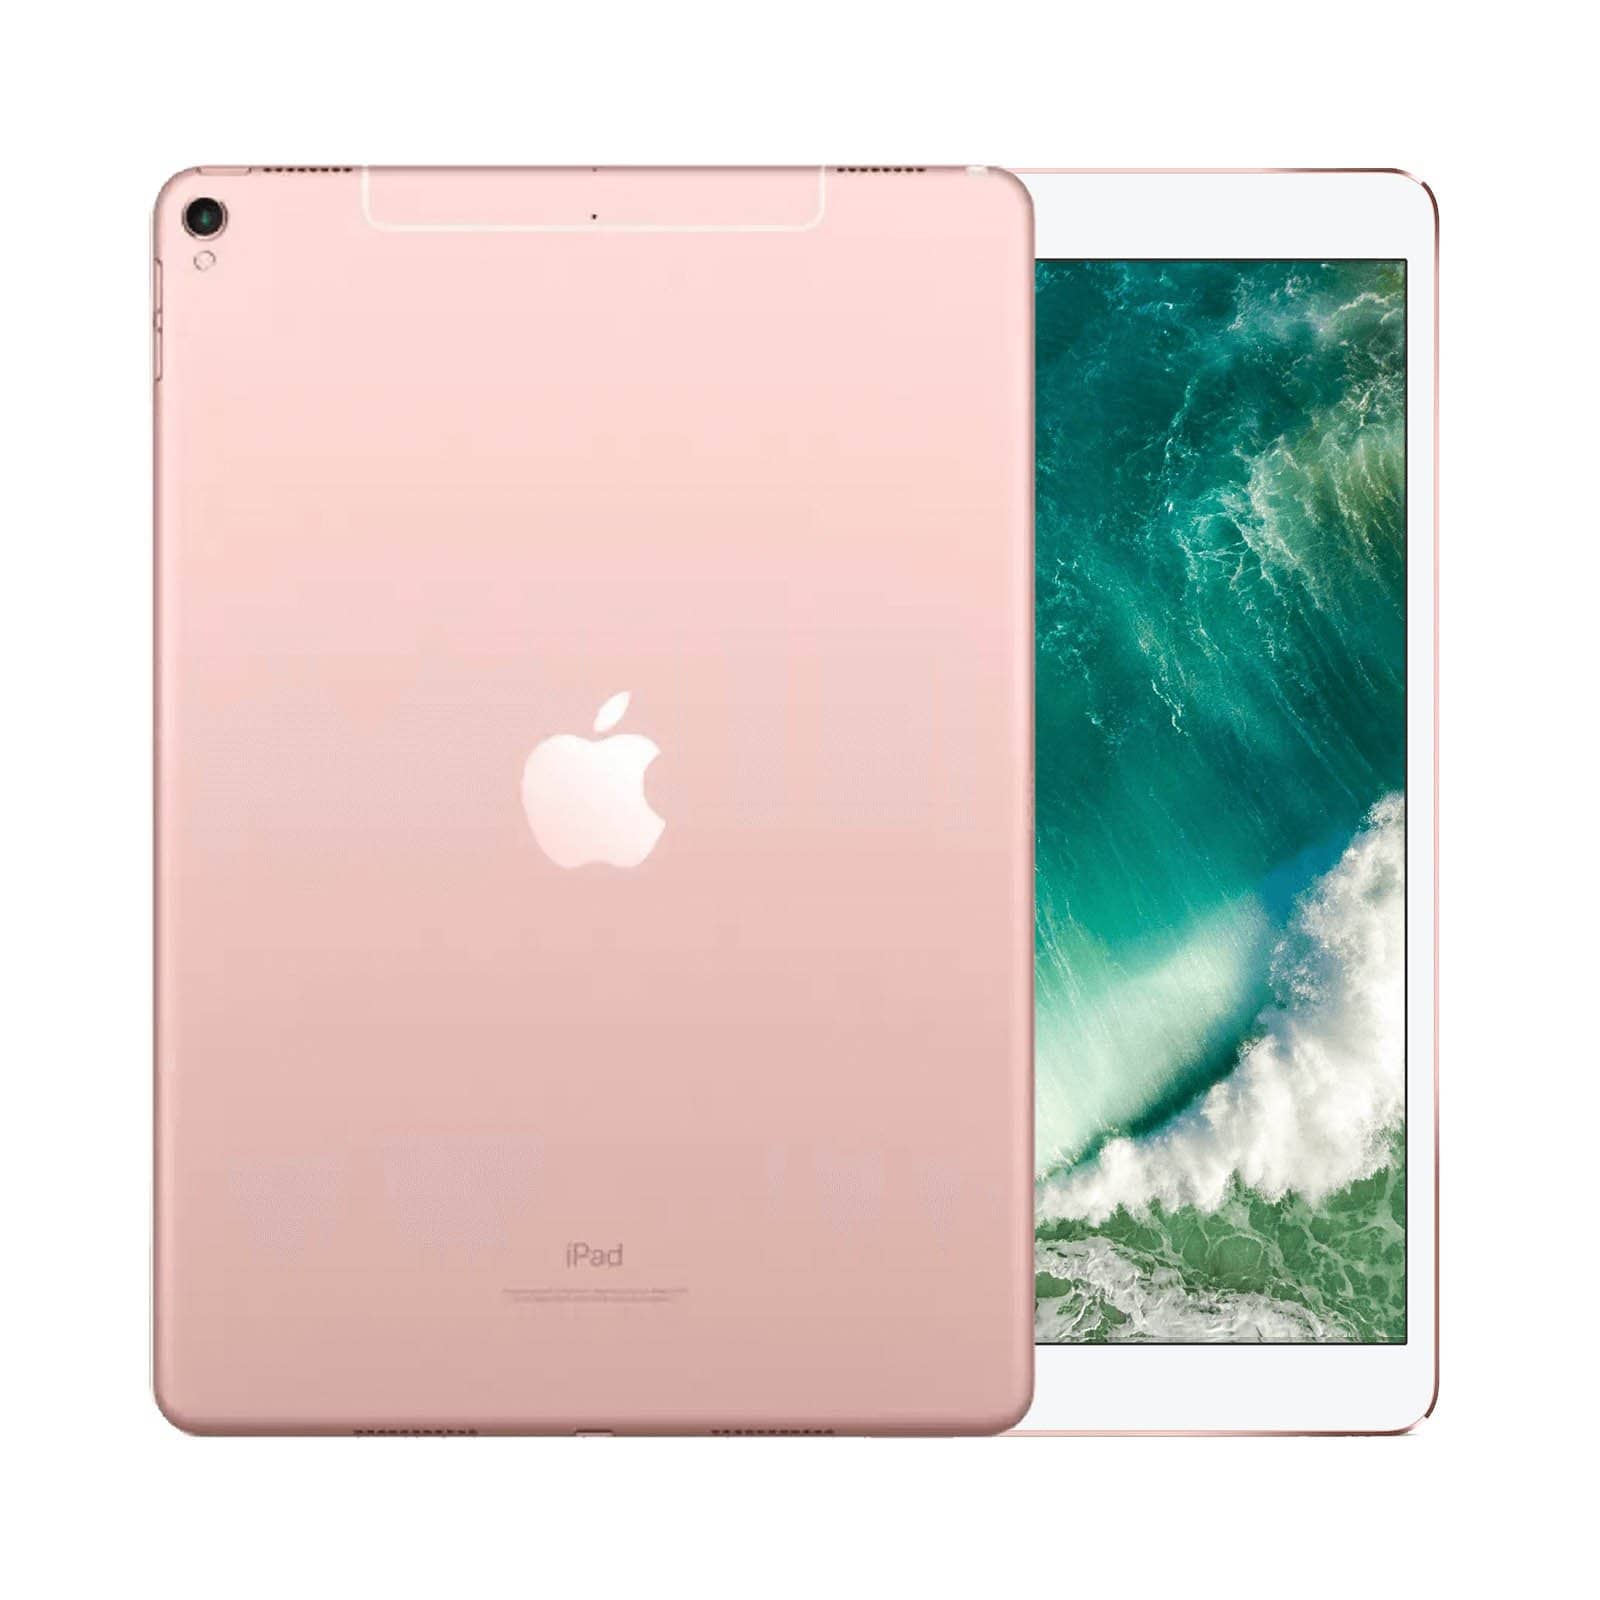 iPad Pro 10.5 Inch 512GB Rose Gold Good - Unlocked 512GB Rose Gold Good